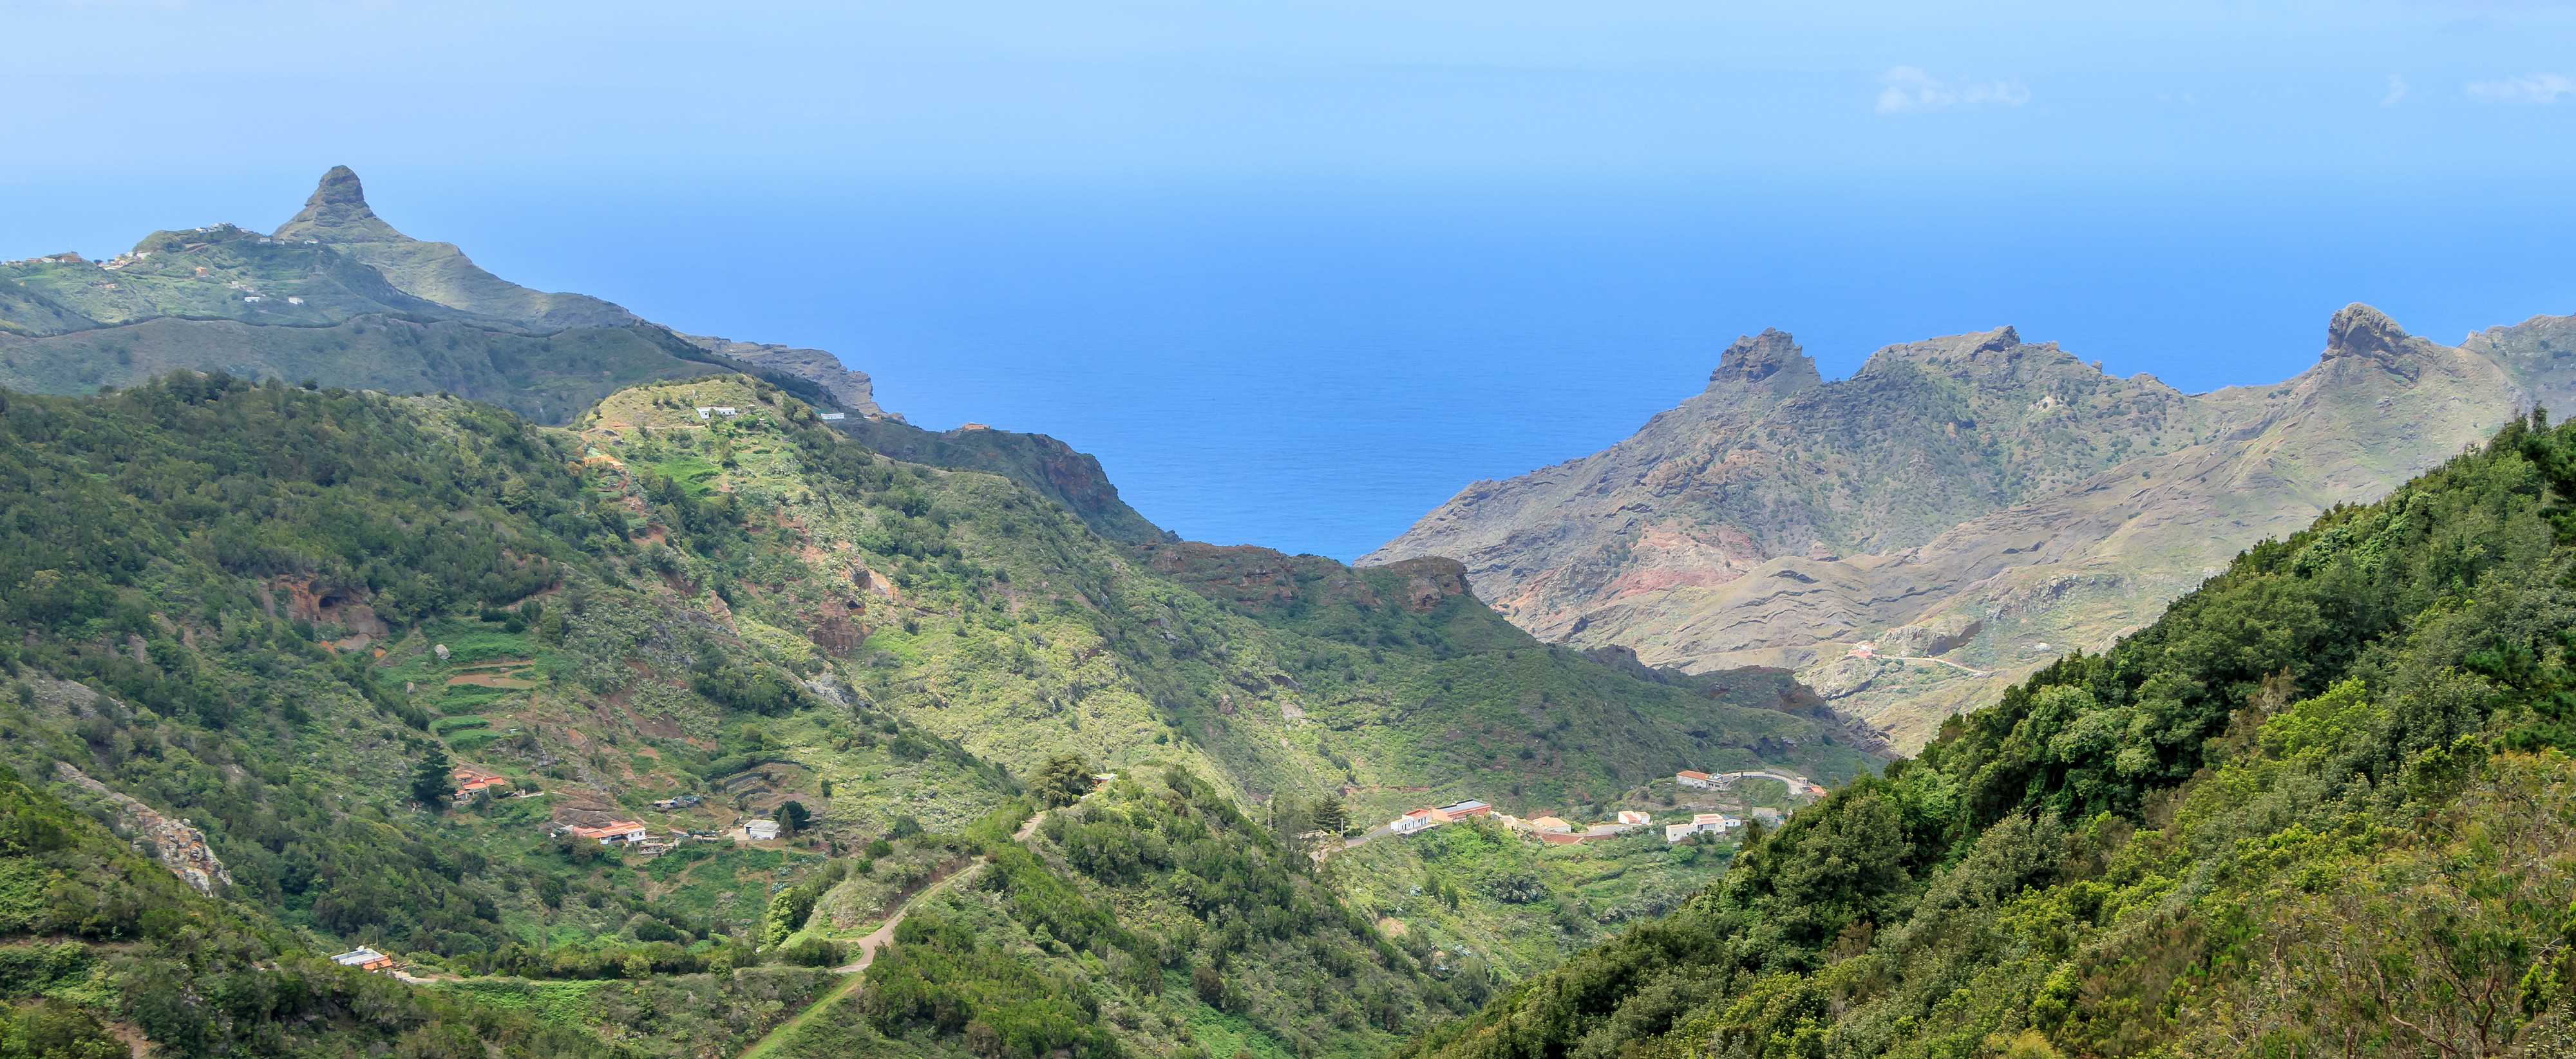 Roque de Taborno - Tenerife 04